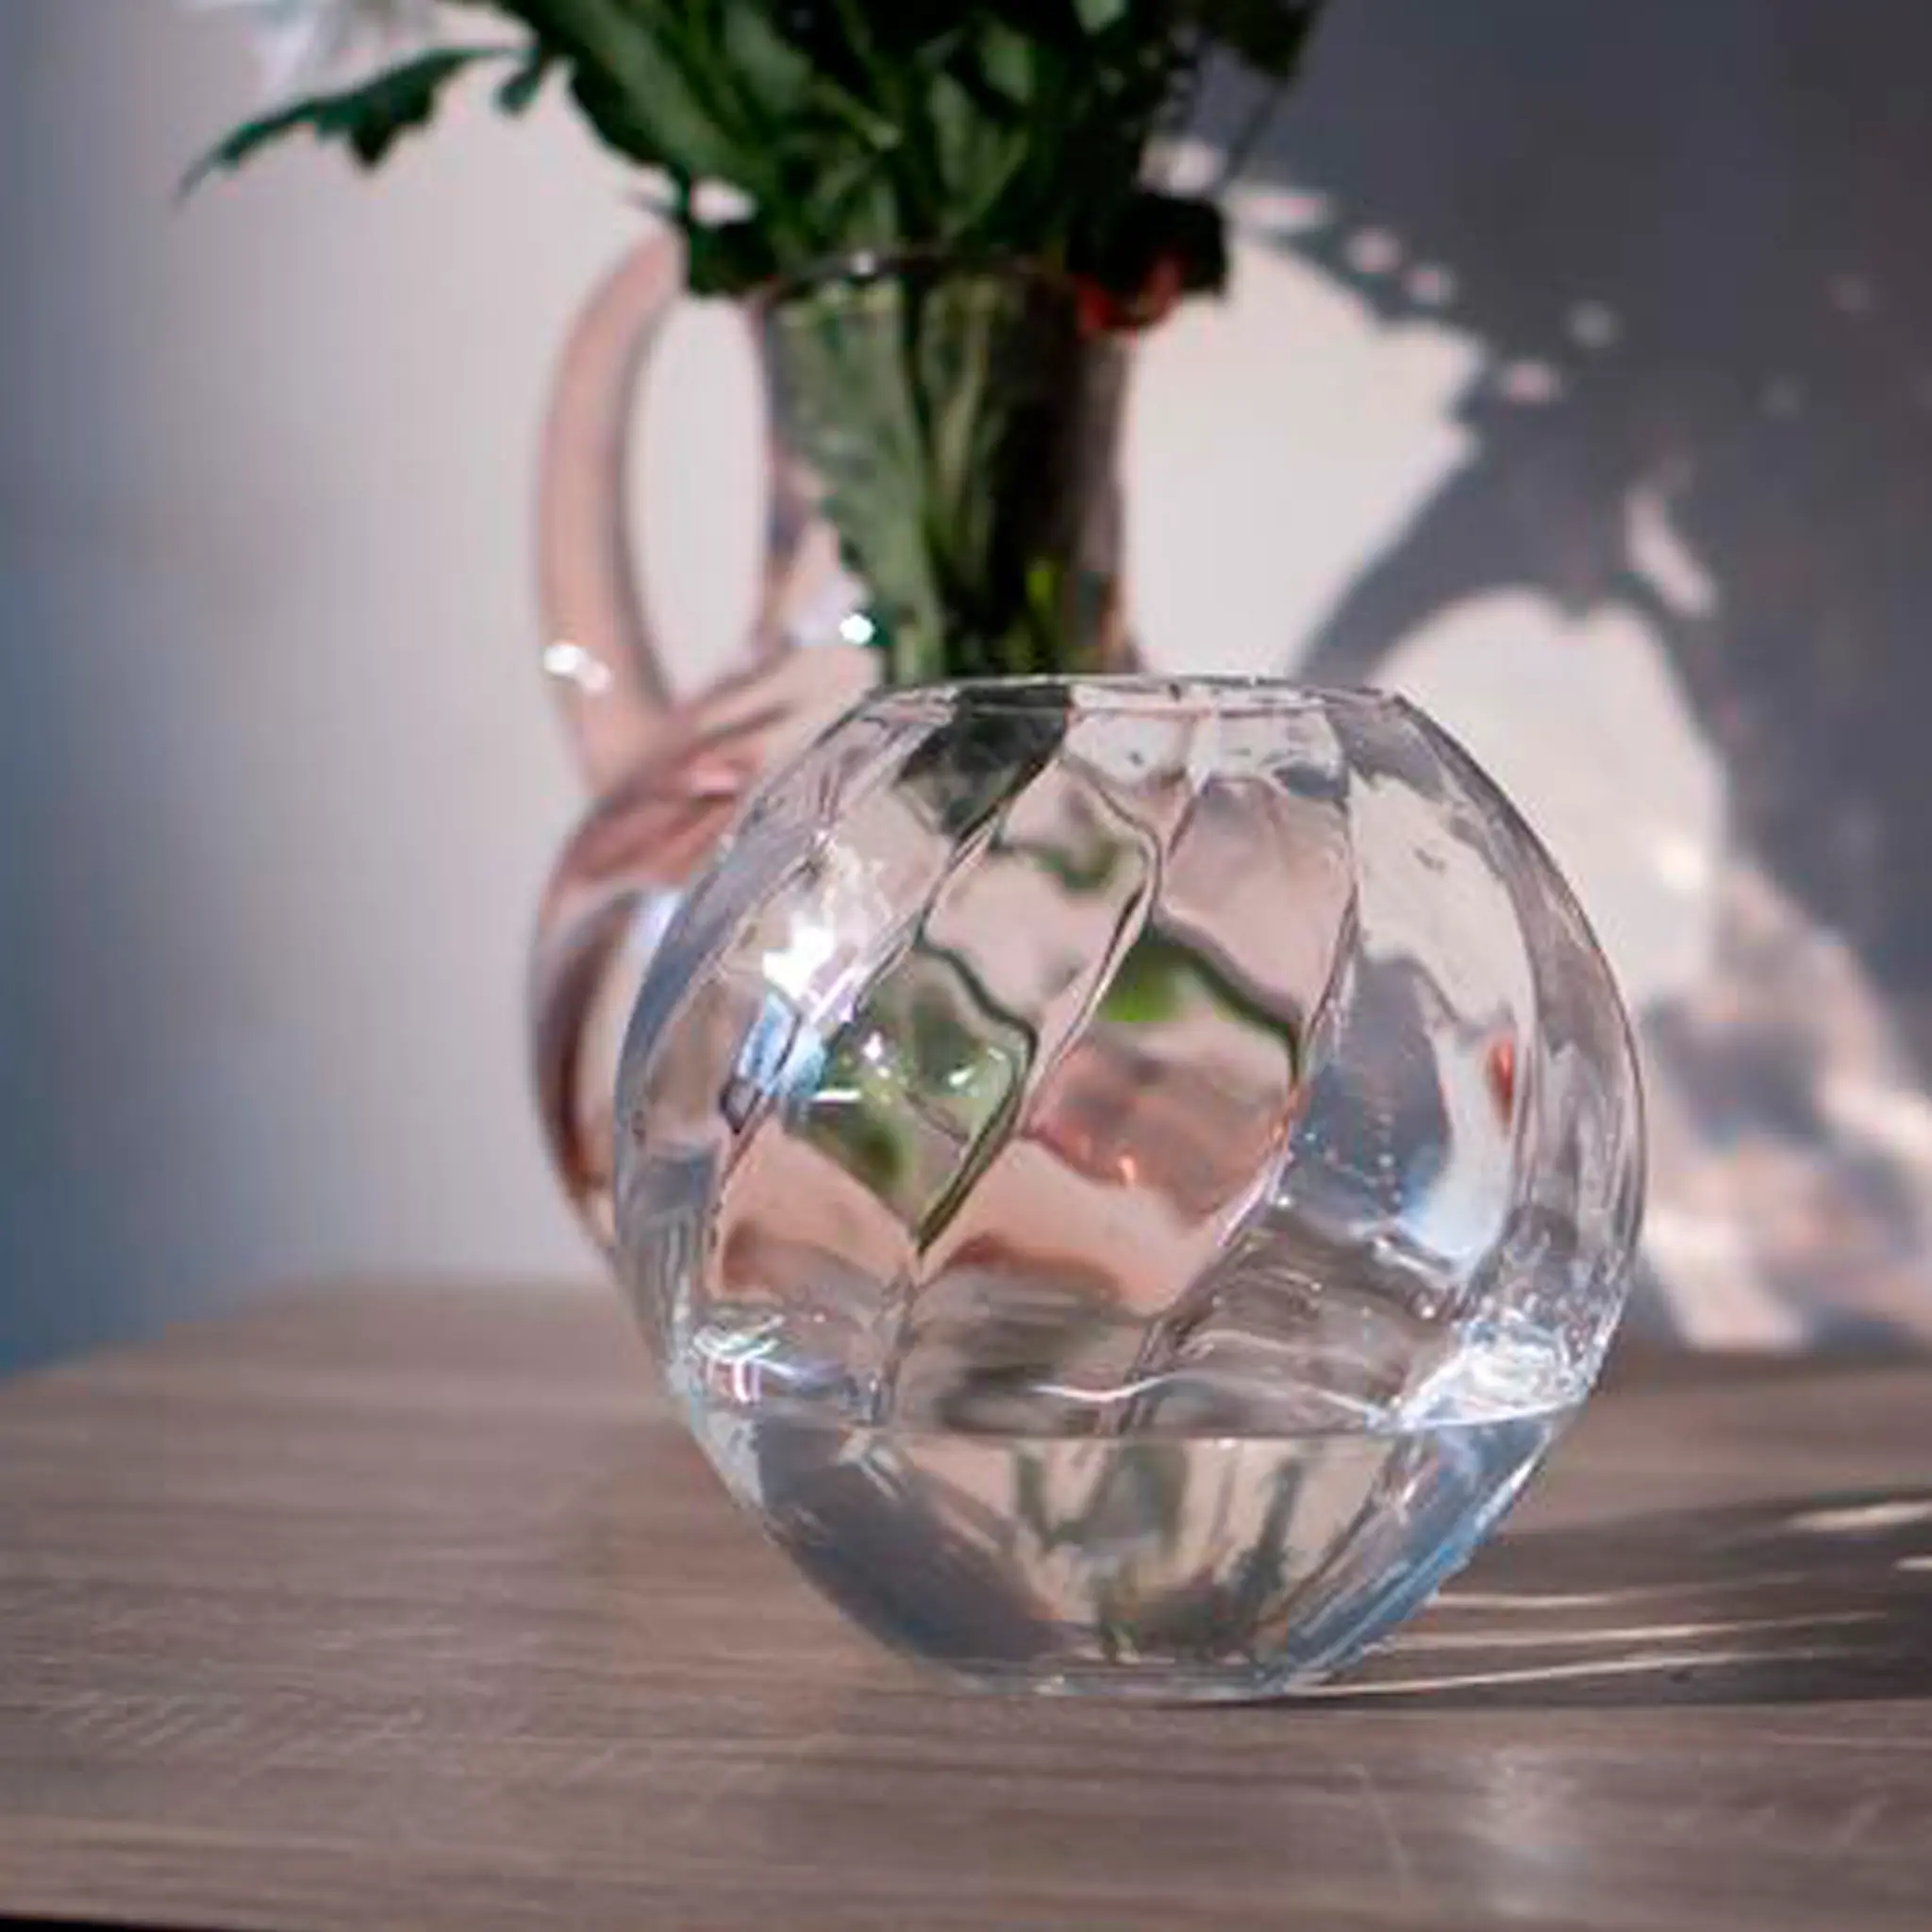 Klimchi Marika vase 16 cm crystal